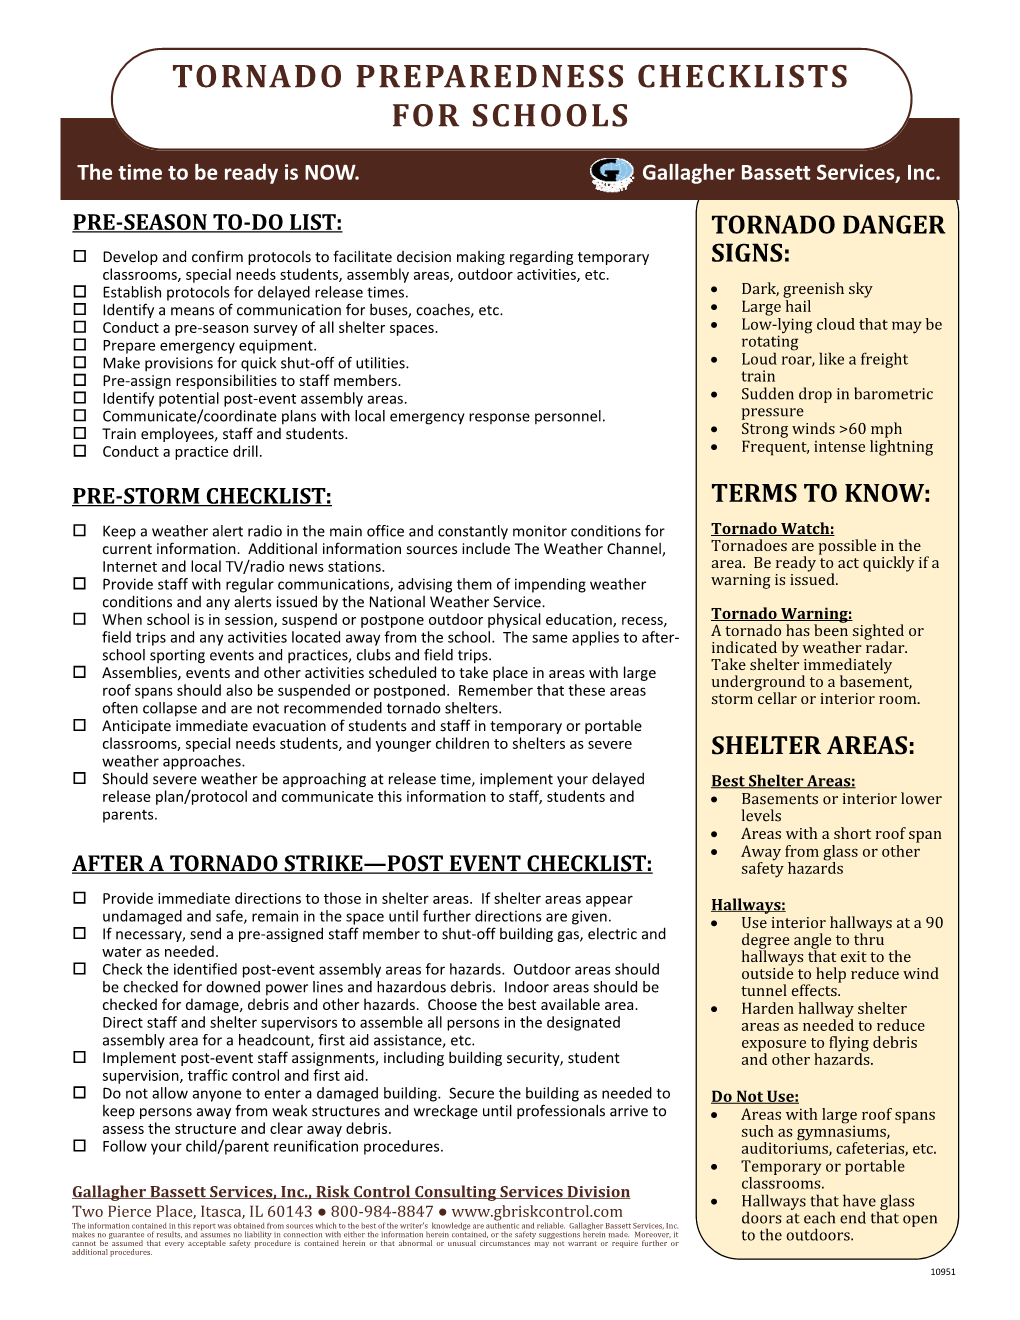 Tornado Preparedness Checklist-Schools